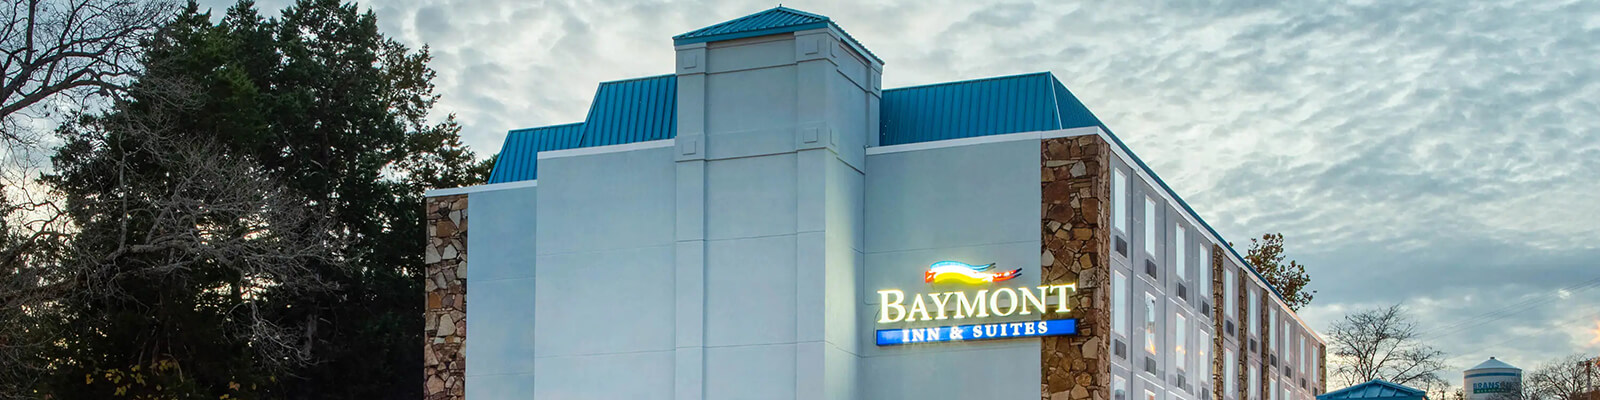 Baymont Inn Suites Branson Coupons